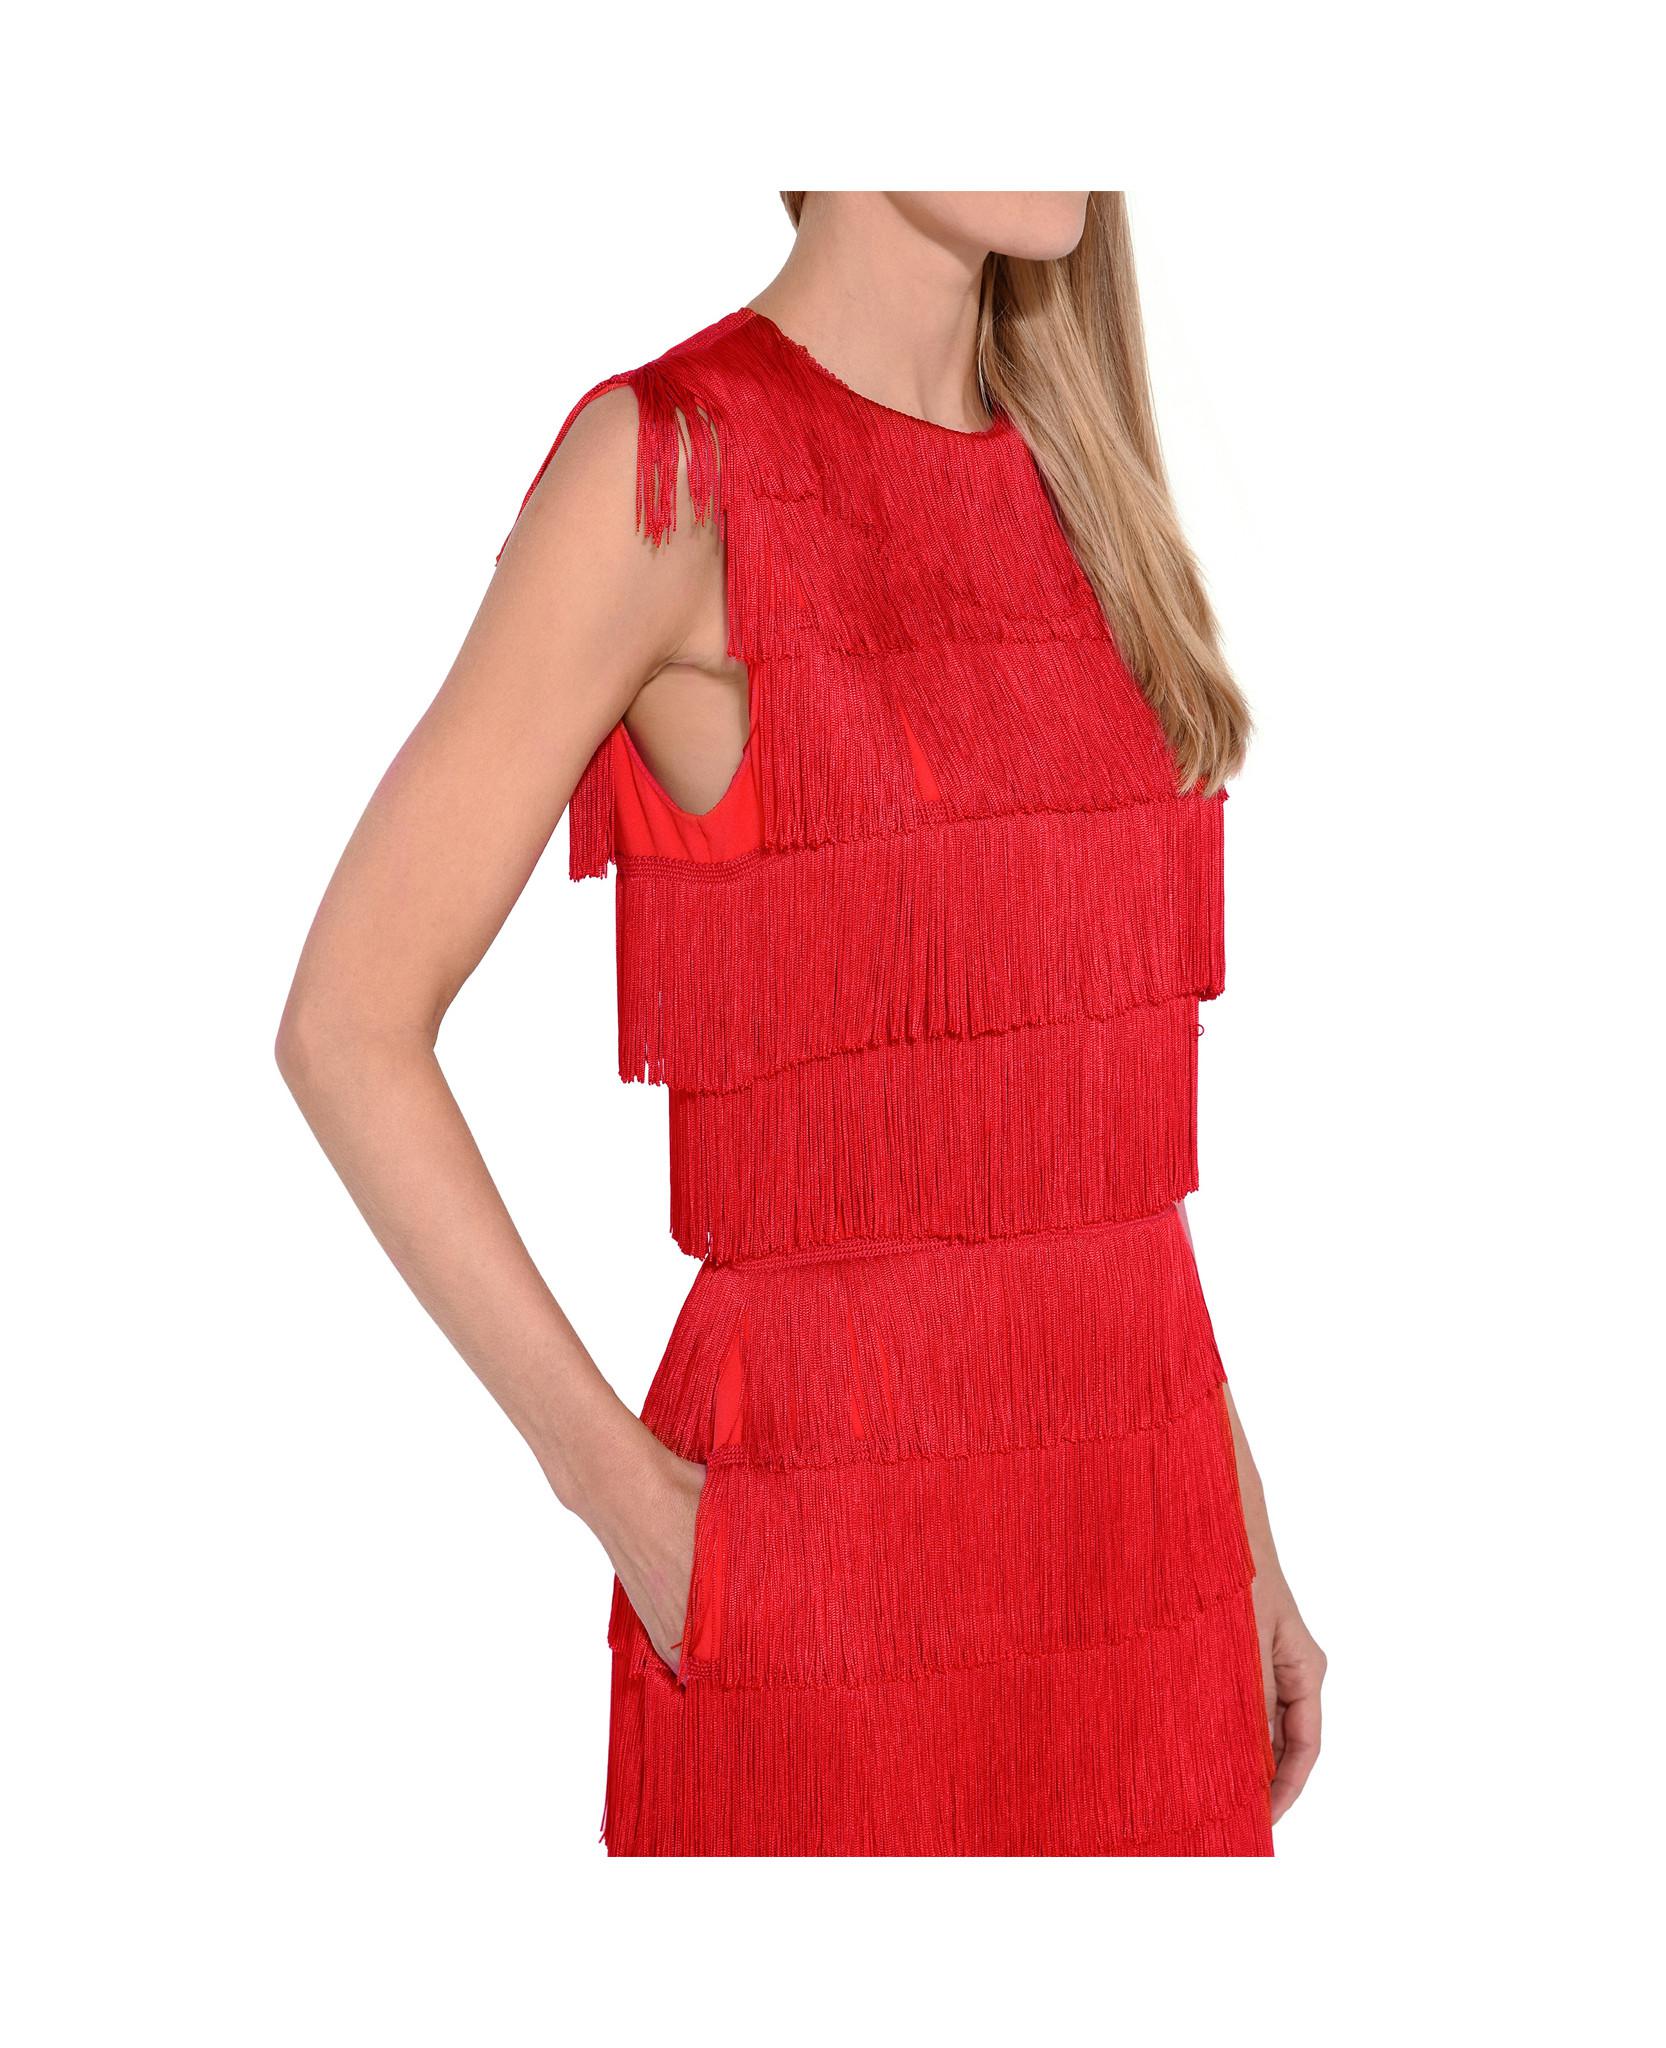 Synthetic Emma Red Fringe Dress ...